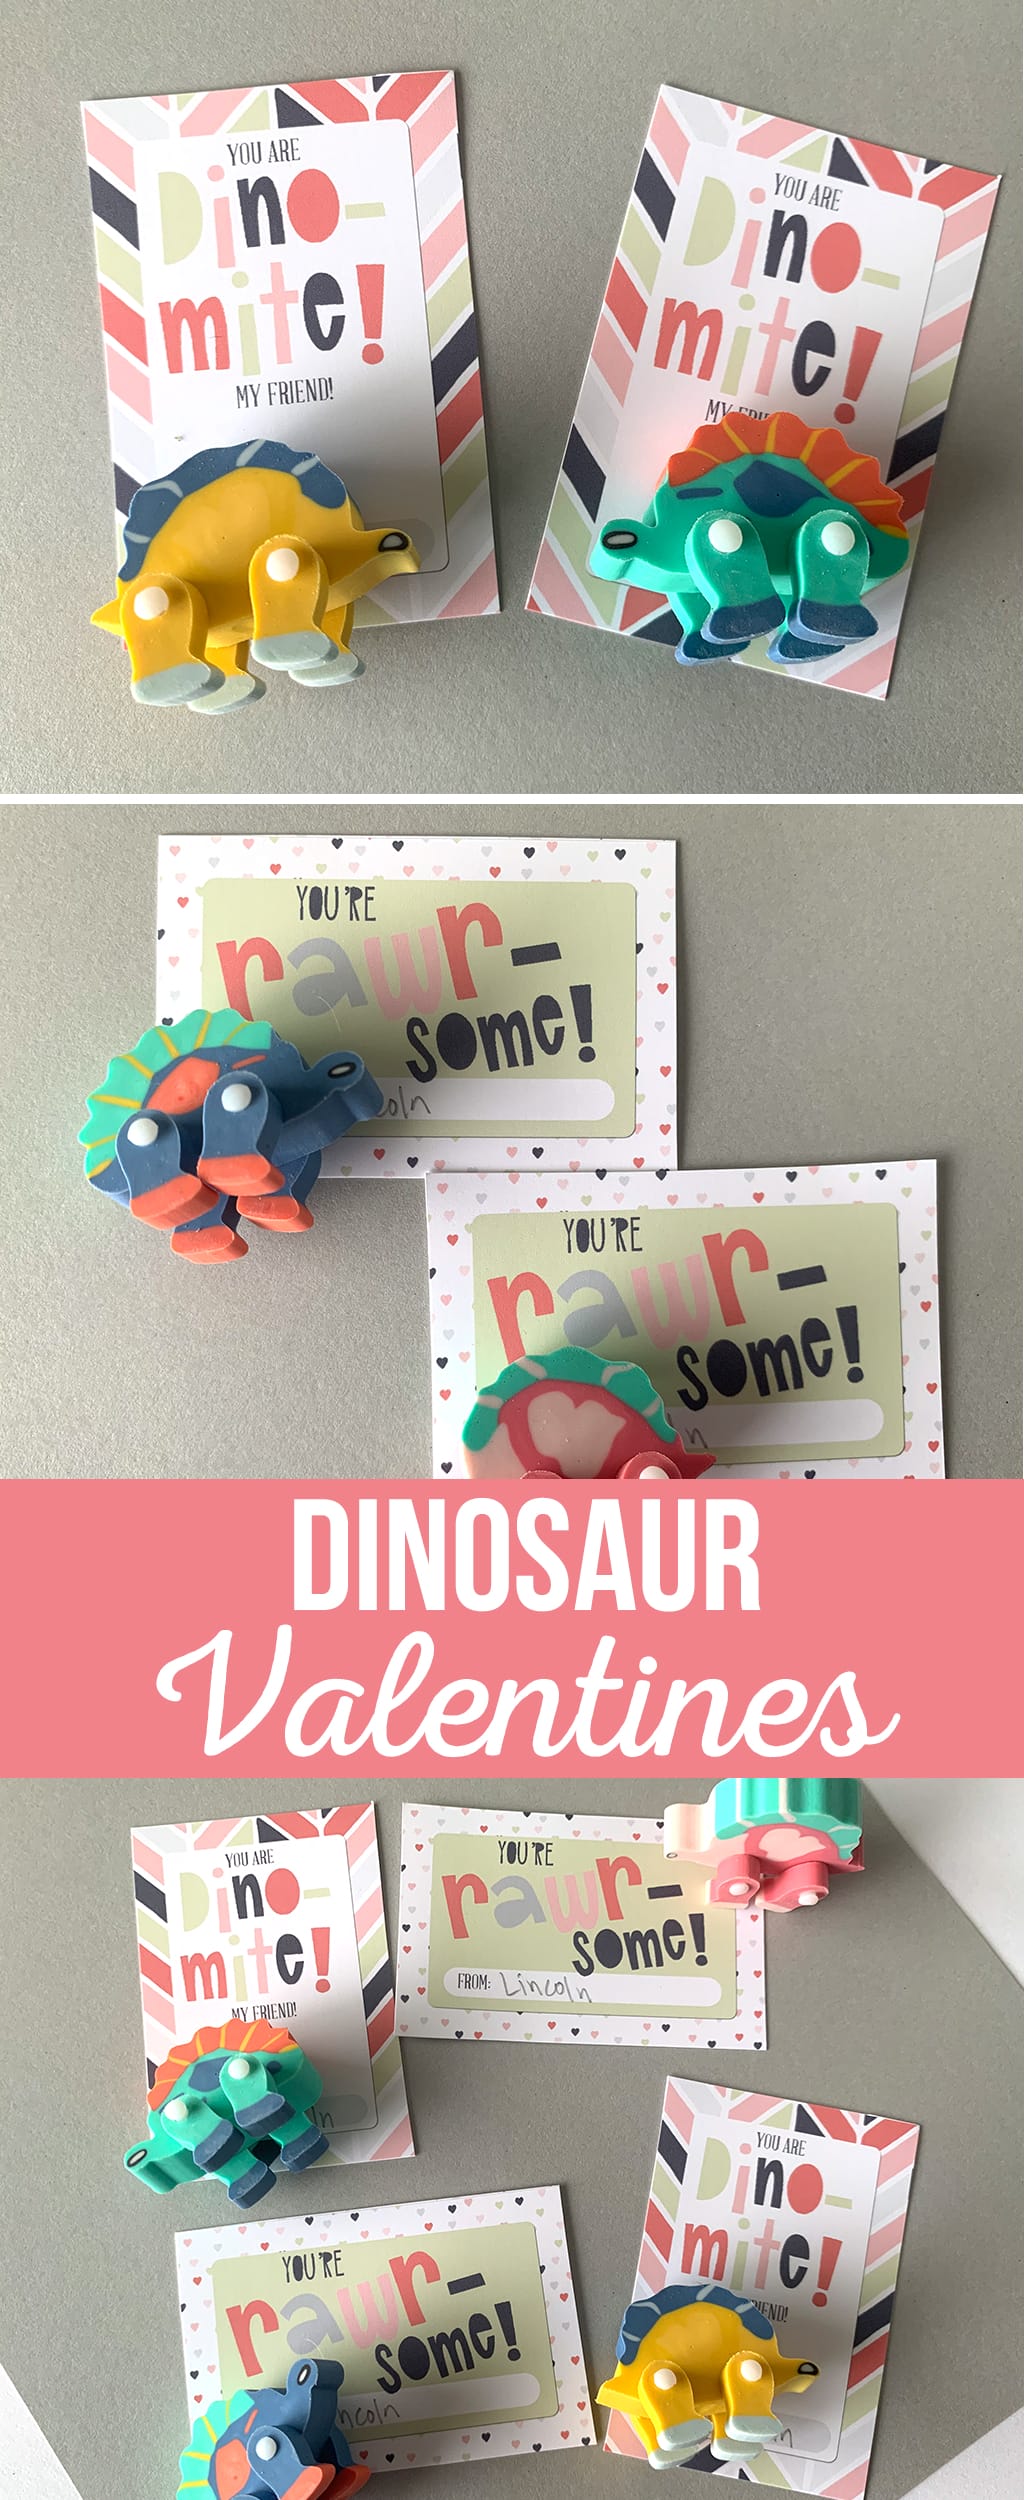 Printable Dinosaur valentines with Dinosaur erasers attached.